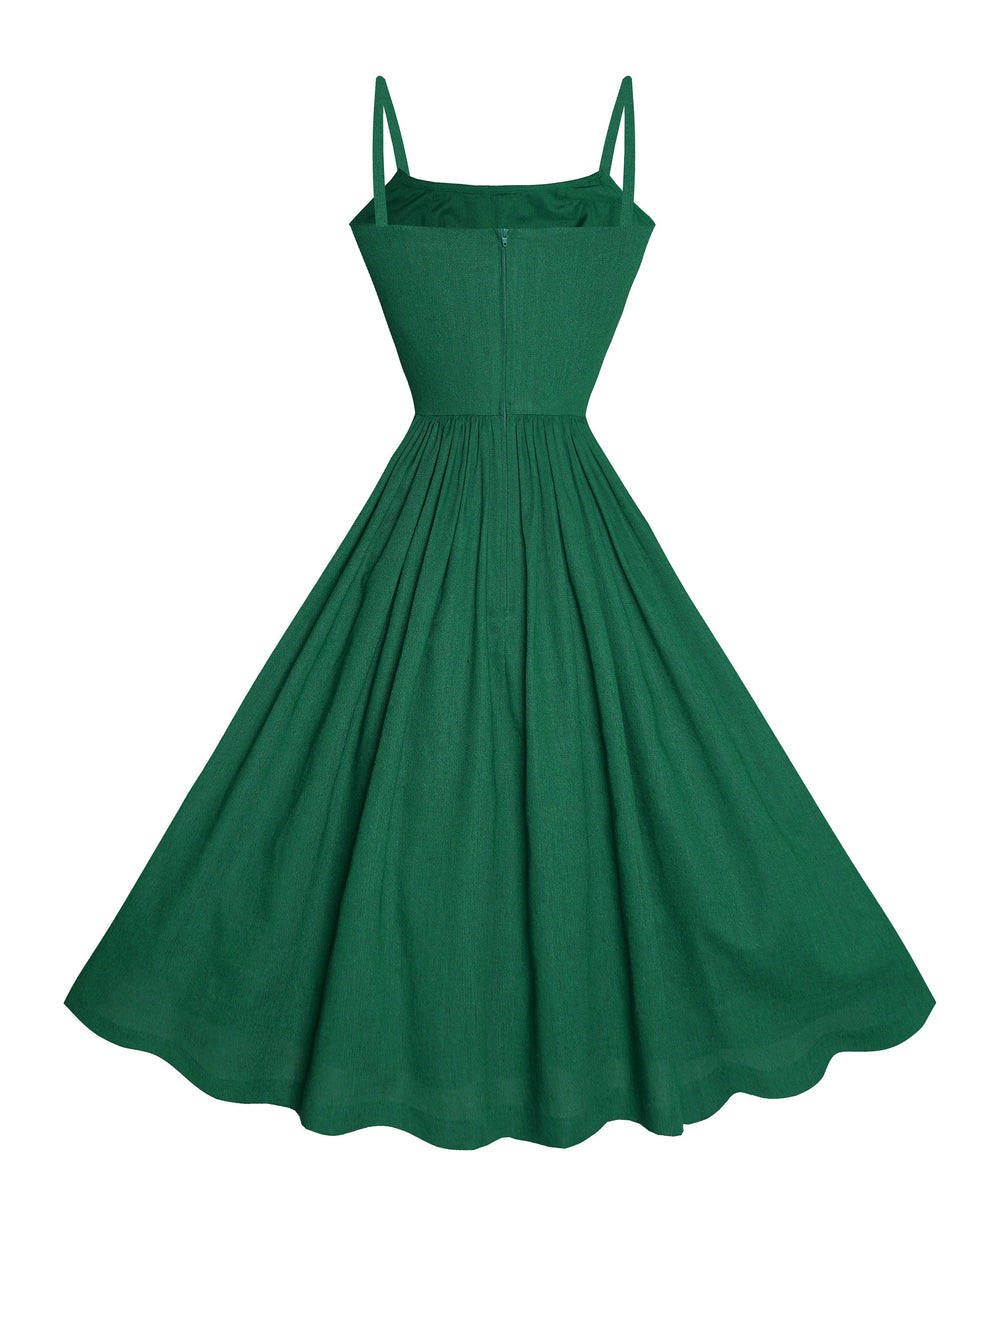 MTO - Grace Dress in Forest Green Linen